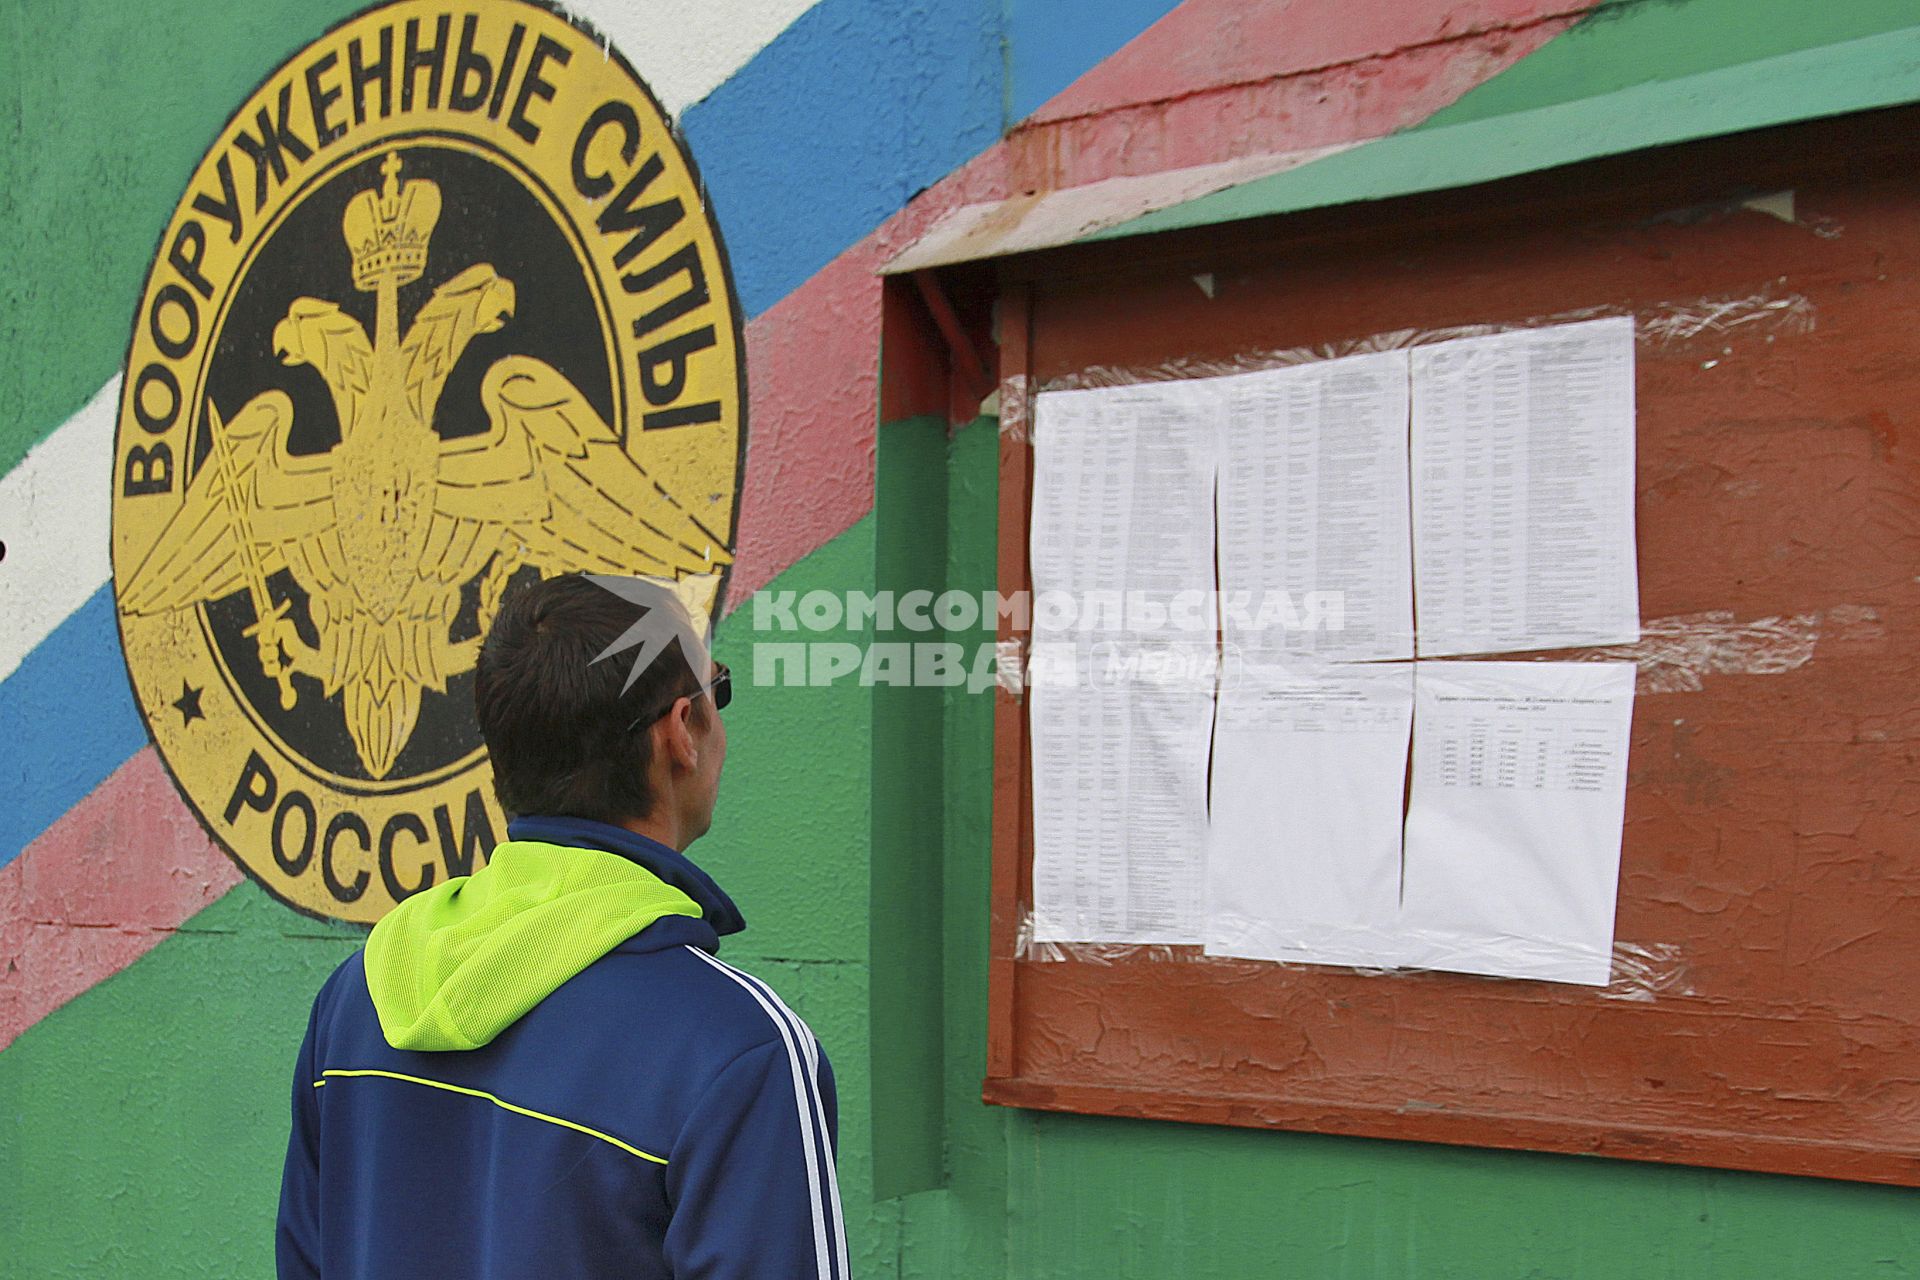 Мужчина у доски объявлений на фоне герба вооруженных сил России.